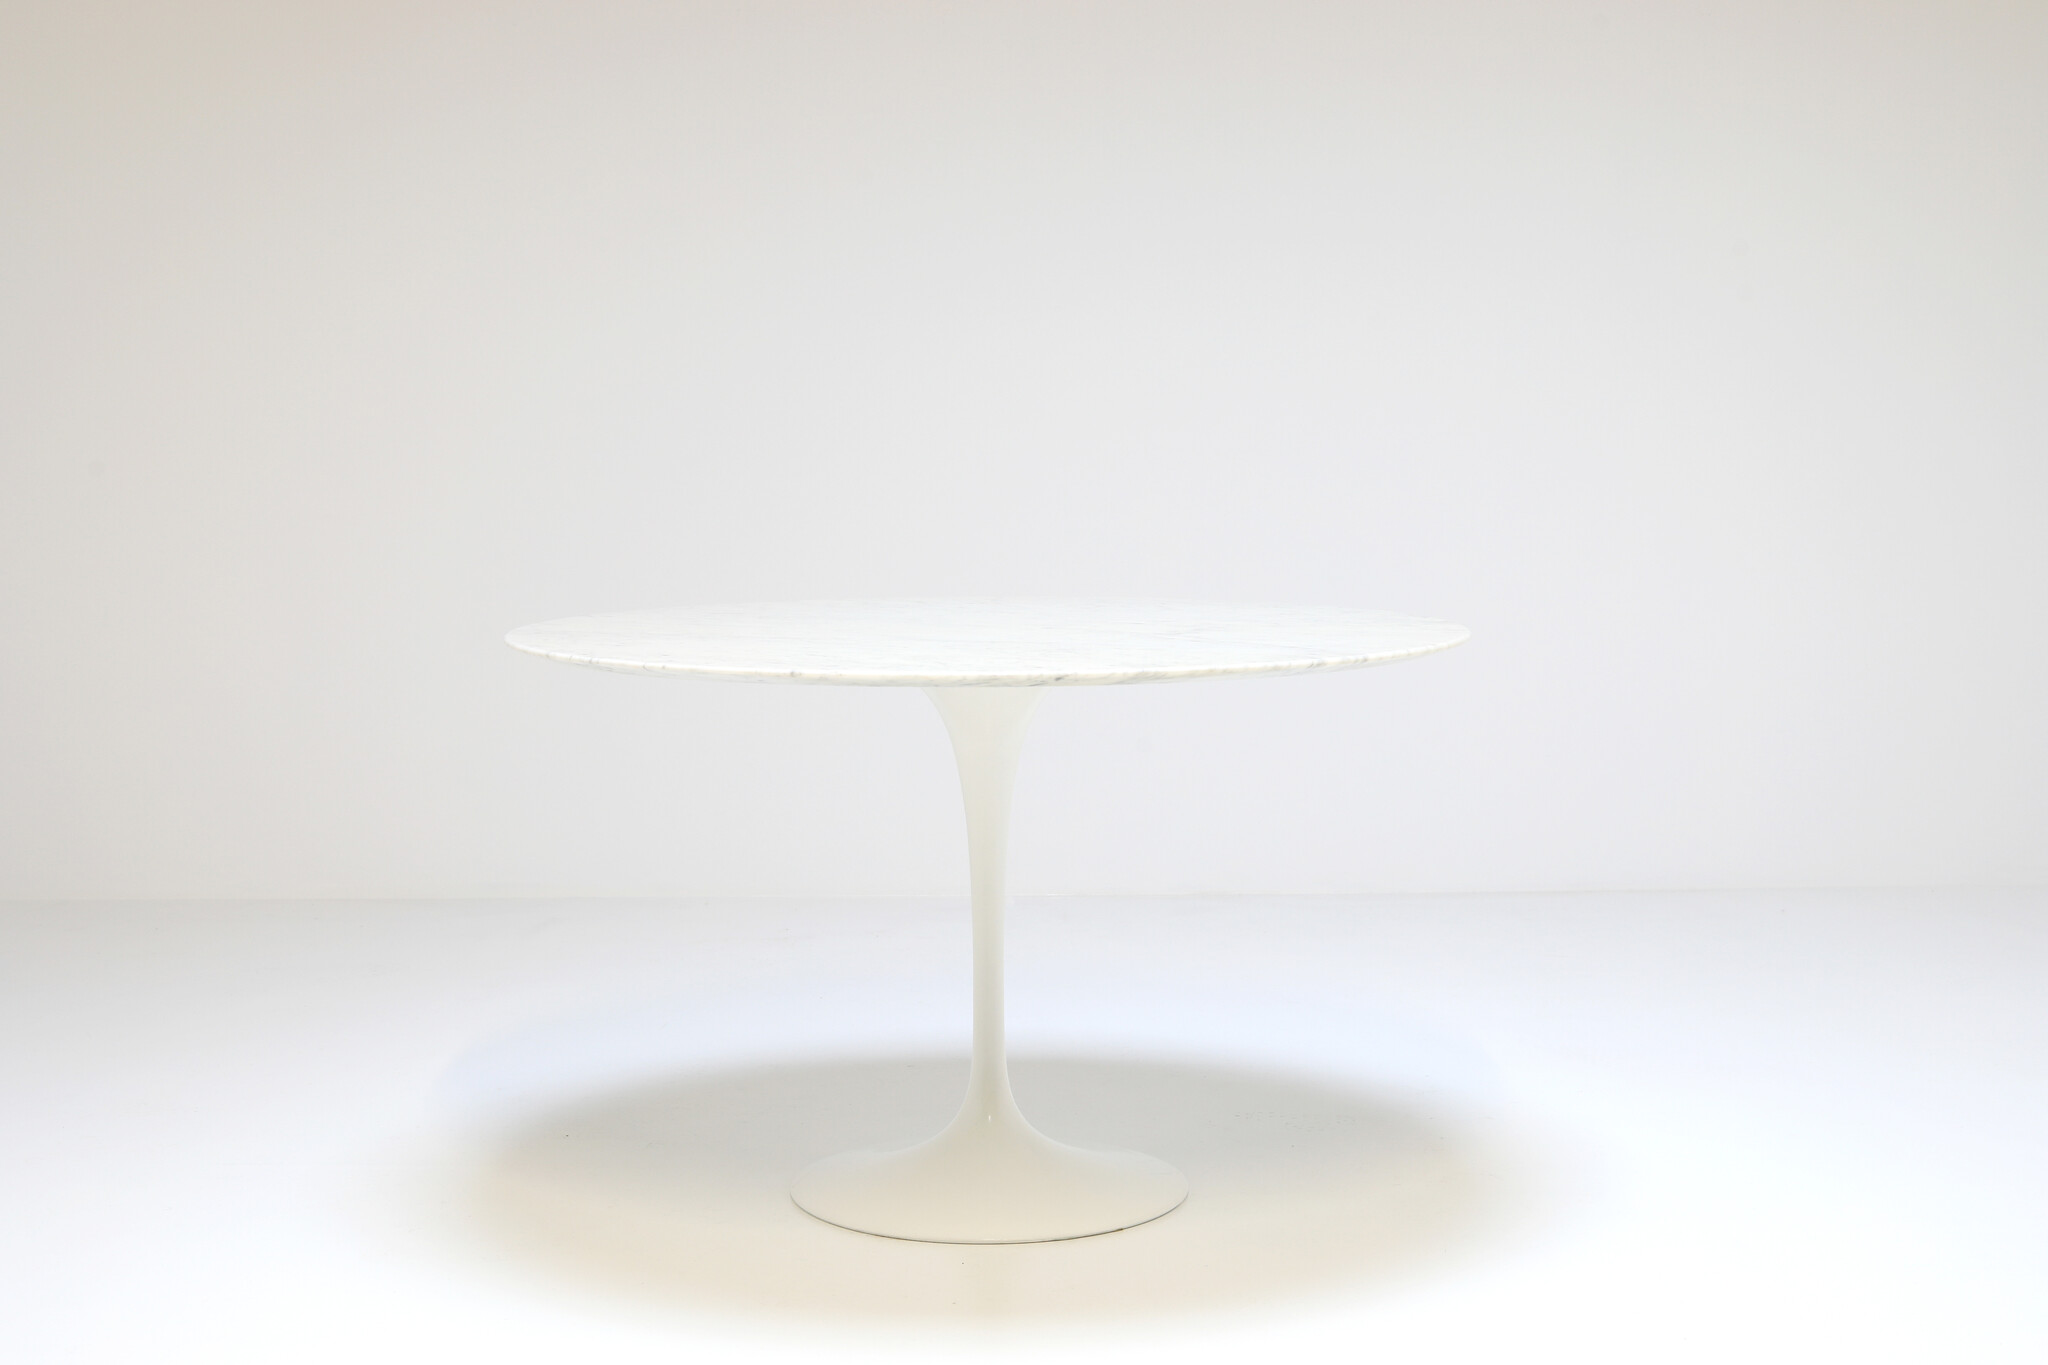 Knoll marble Tulip table designed by Eero Saarinen